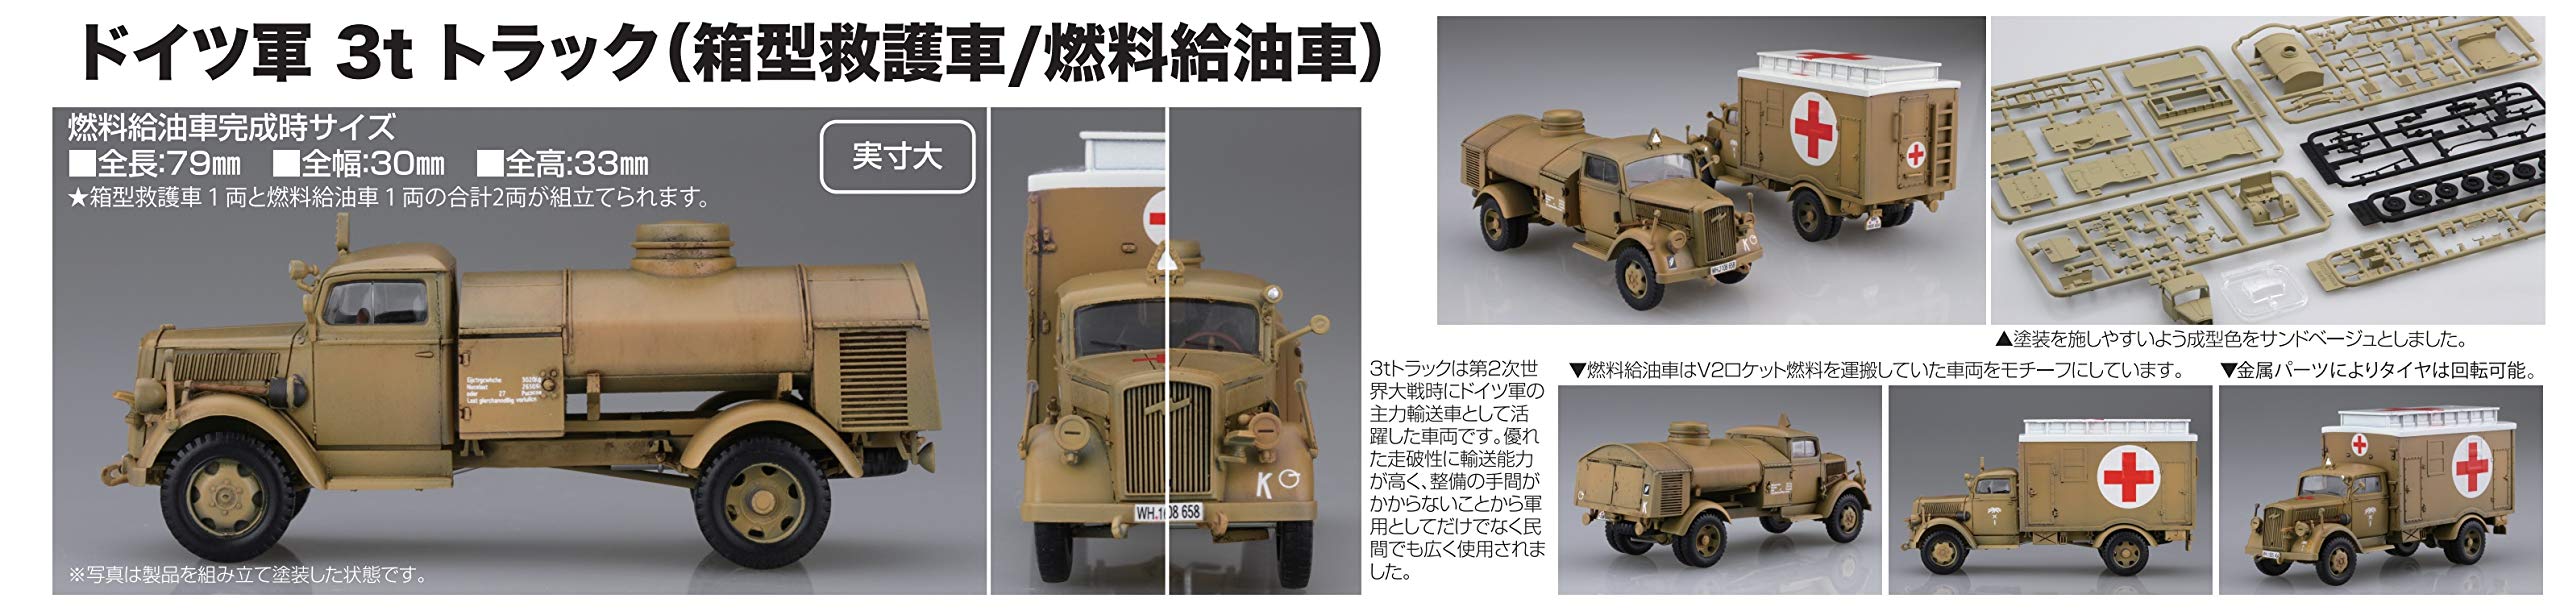 FUJIMI Military Series No.4 German 3T Truck Truck/Refueling Car 1/72 Scale